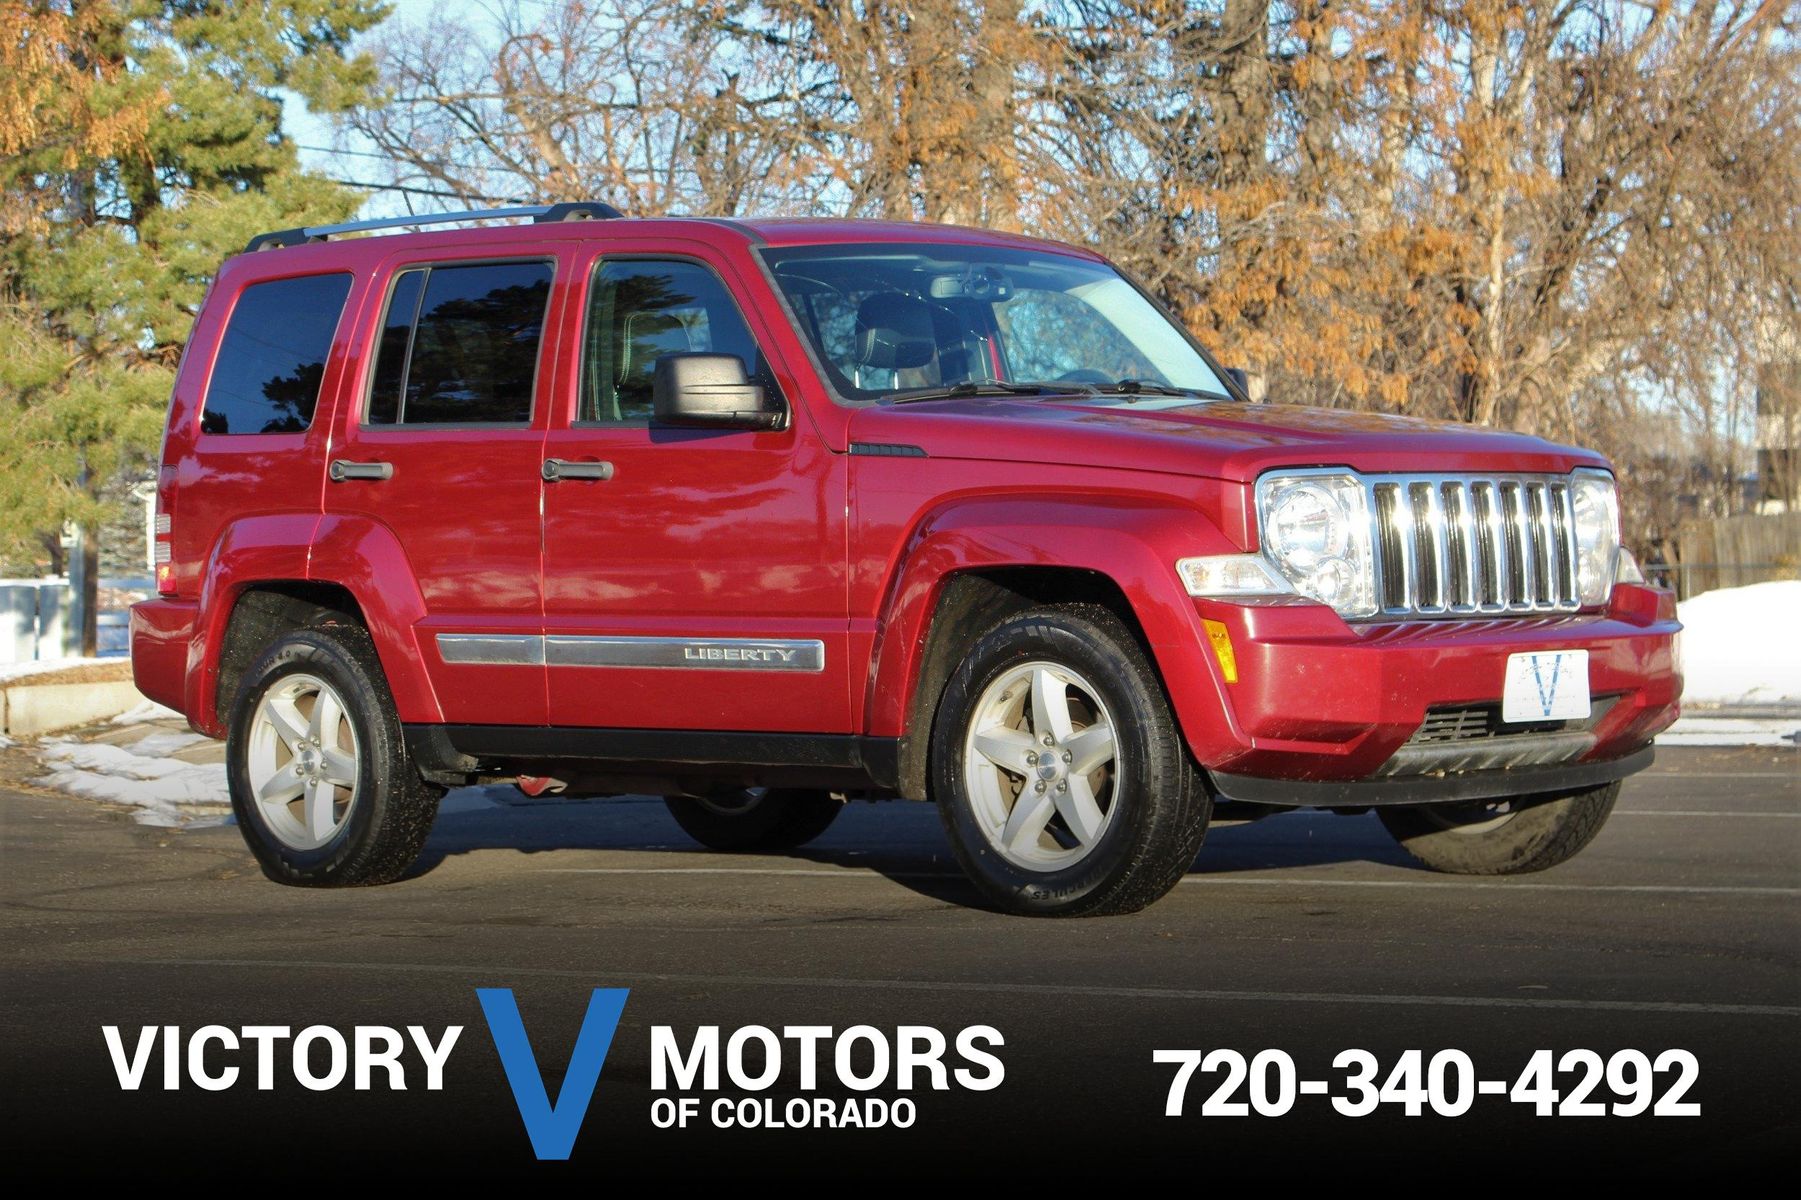 2012 Jeep Liberty Limited Victory Motors of Colorado